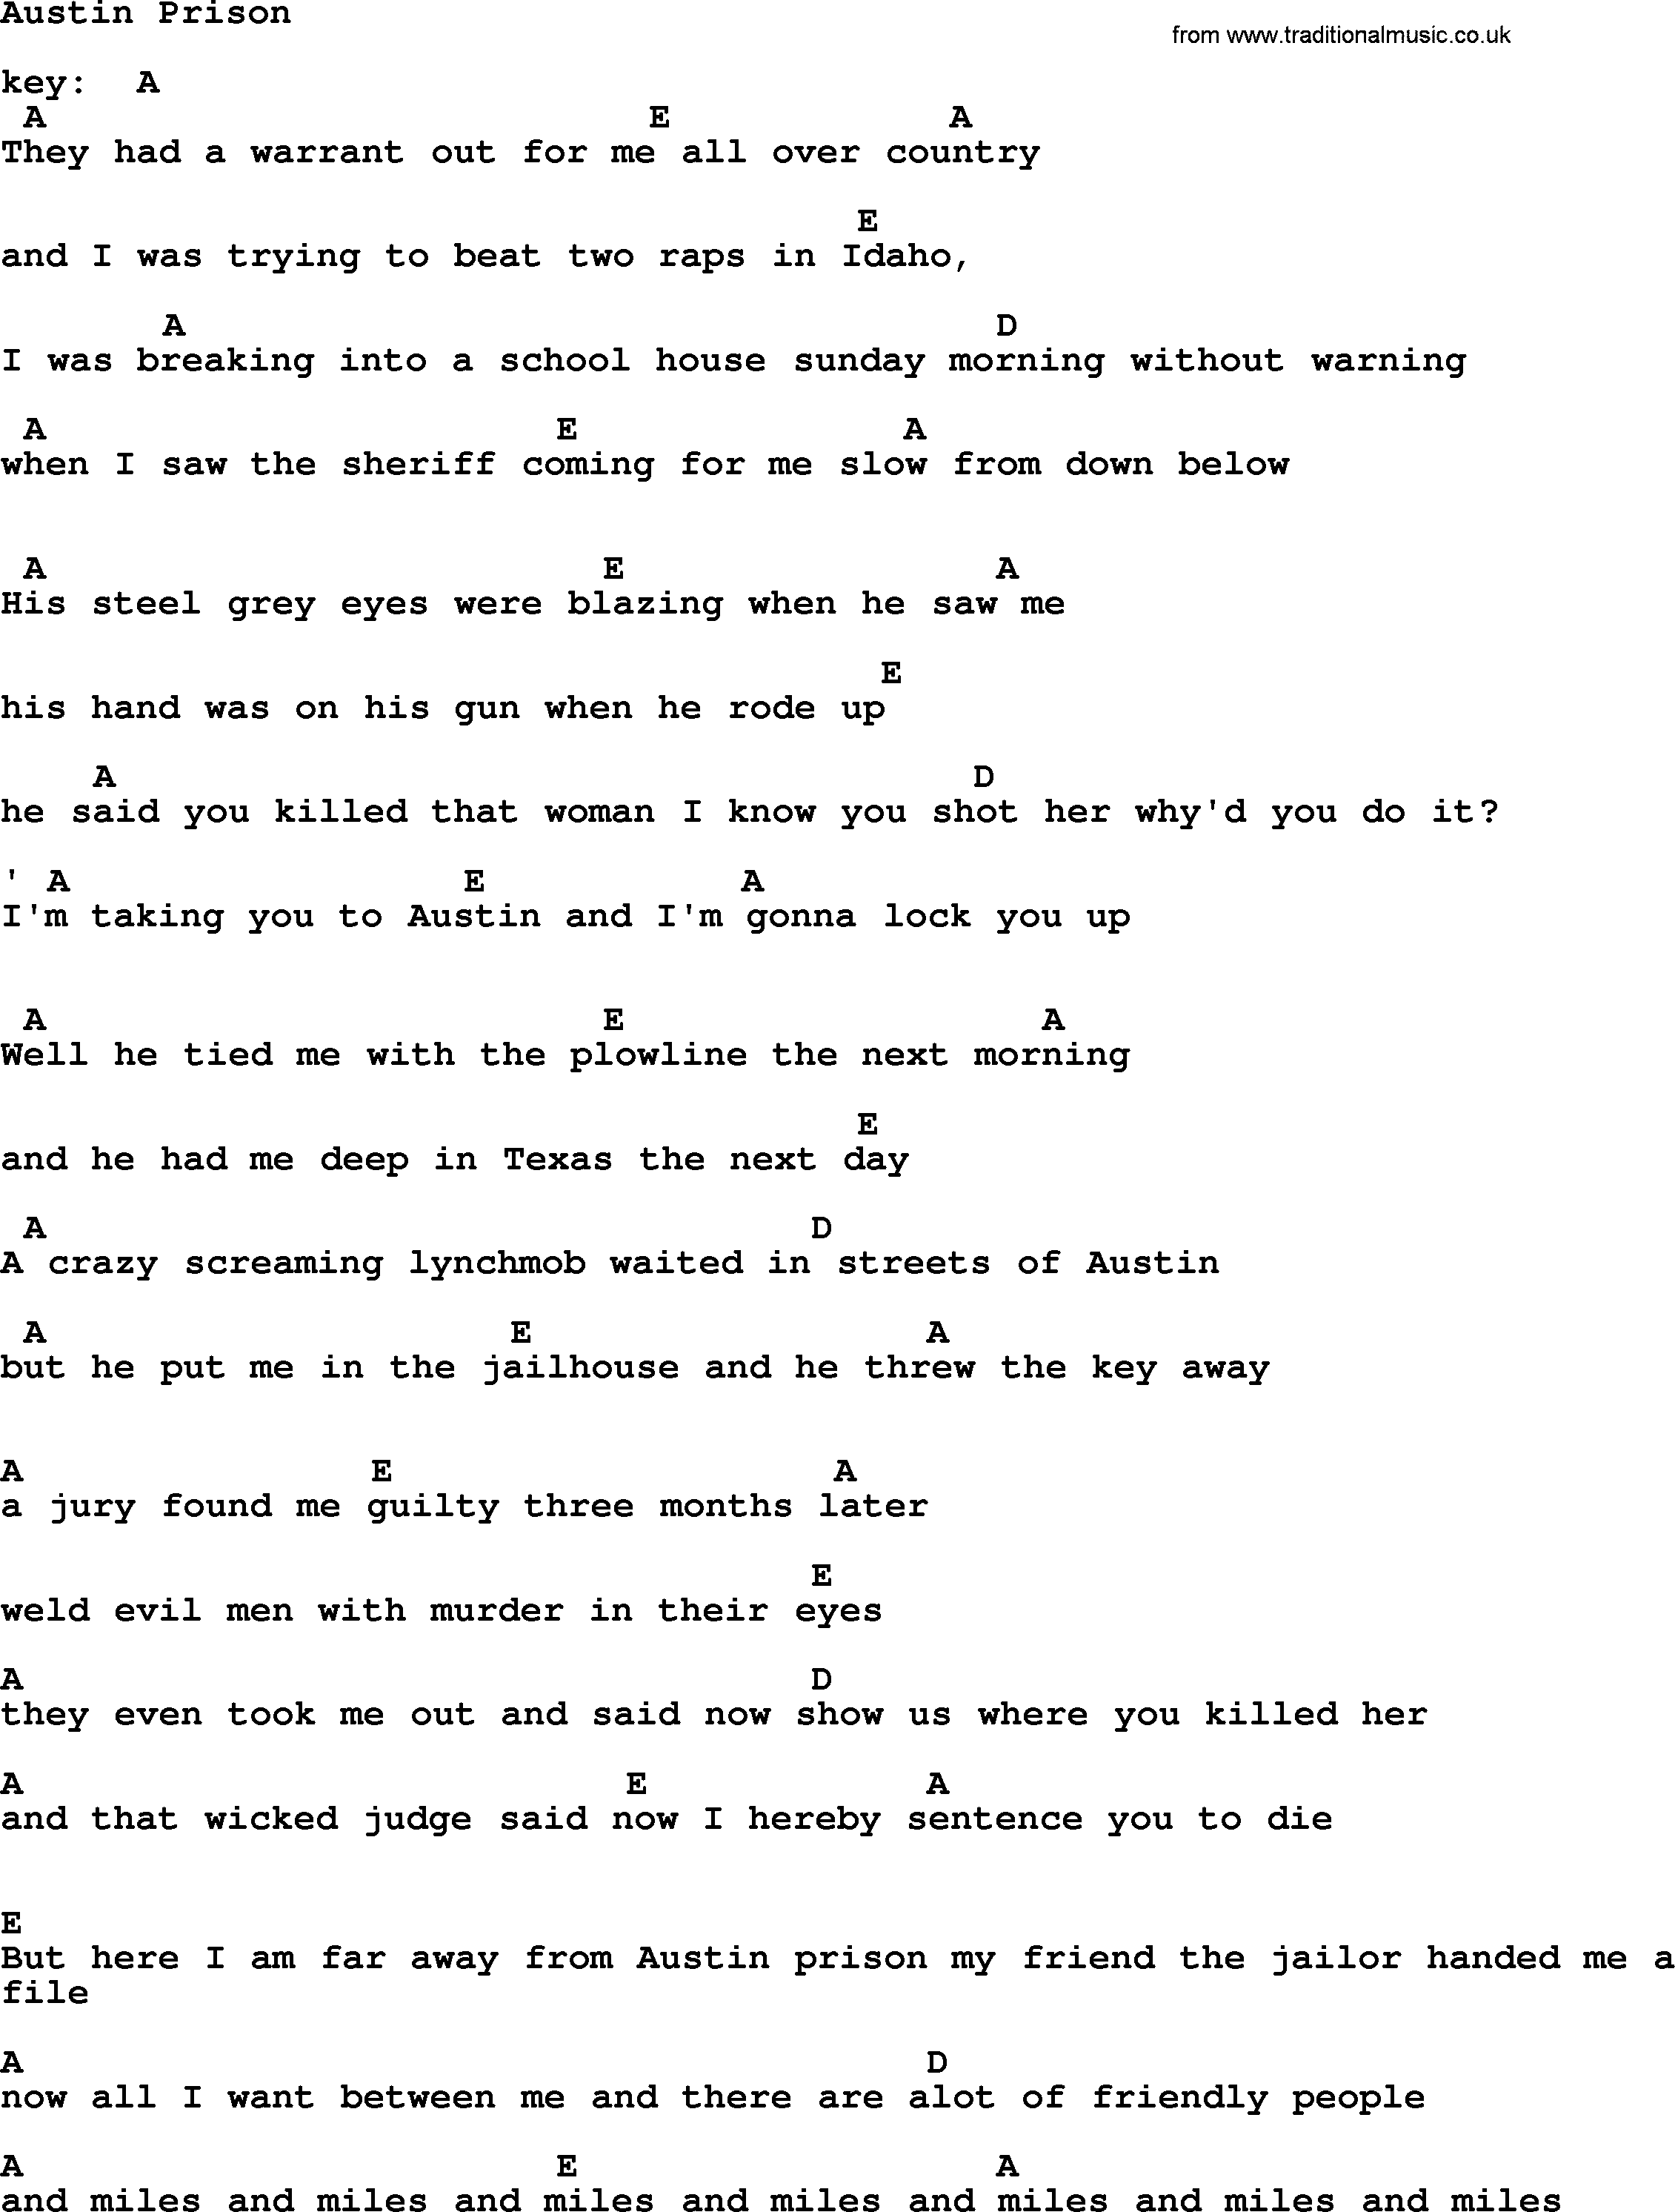 Johnny Cash song Austin Prison, lyrics and chords